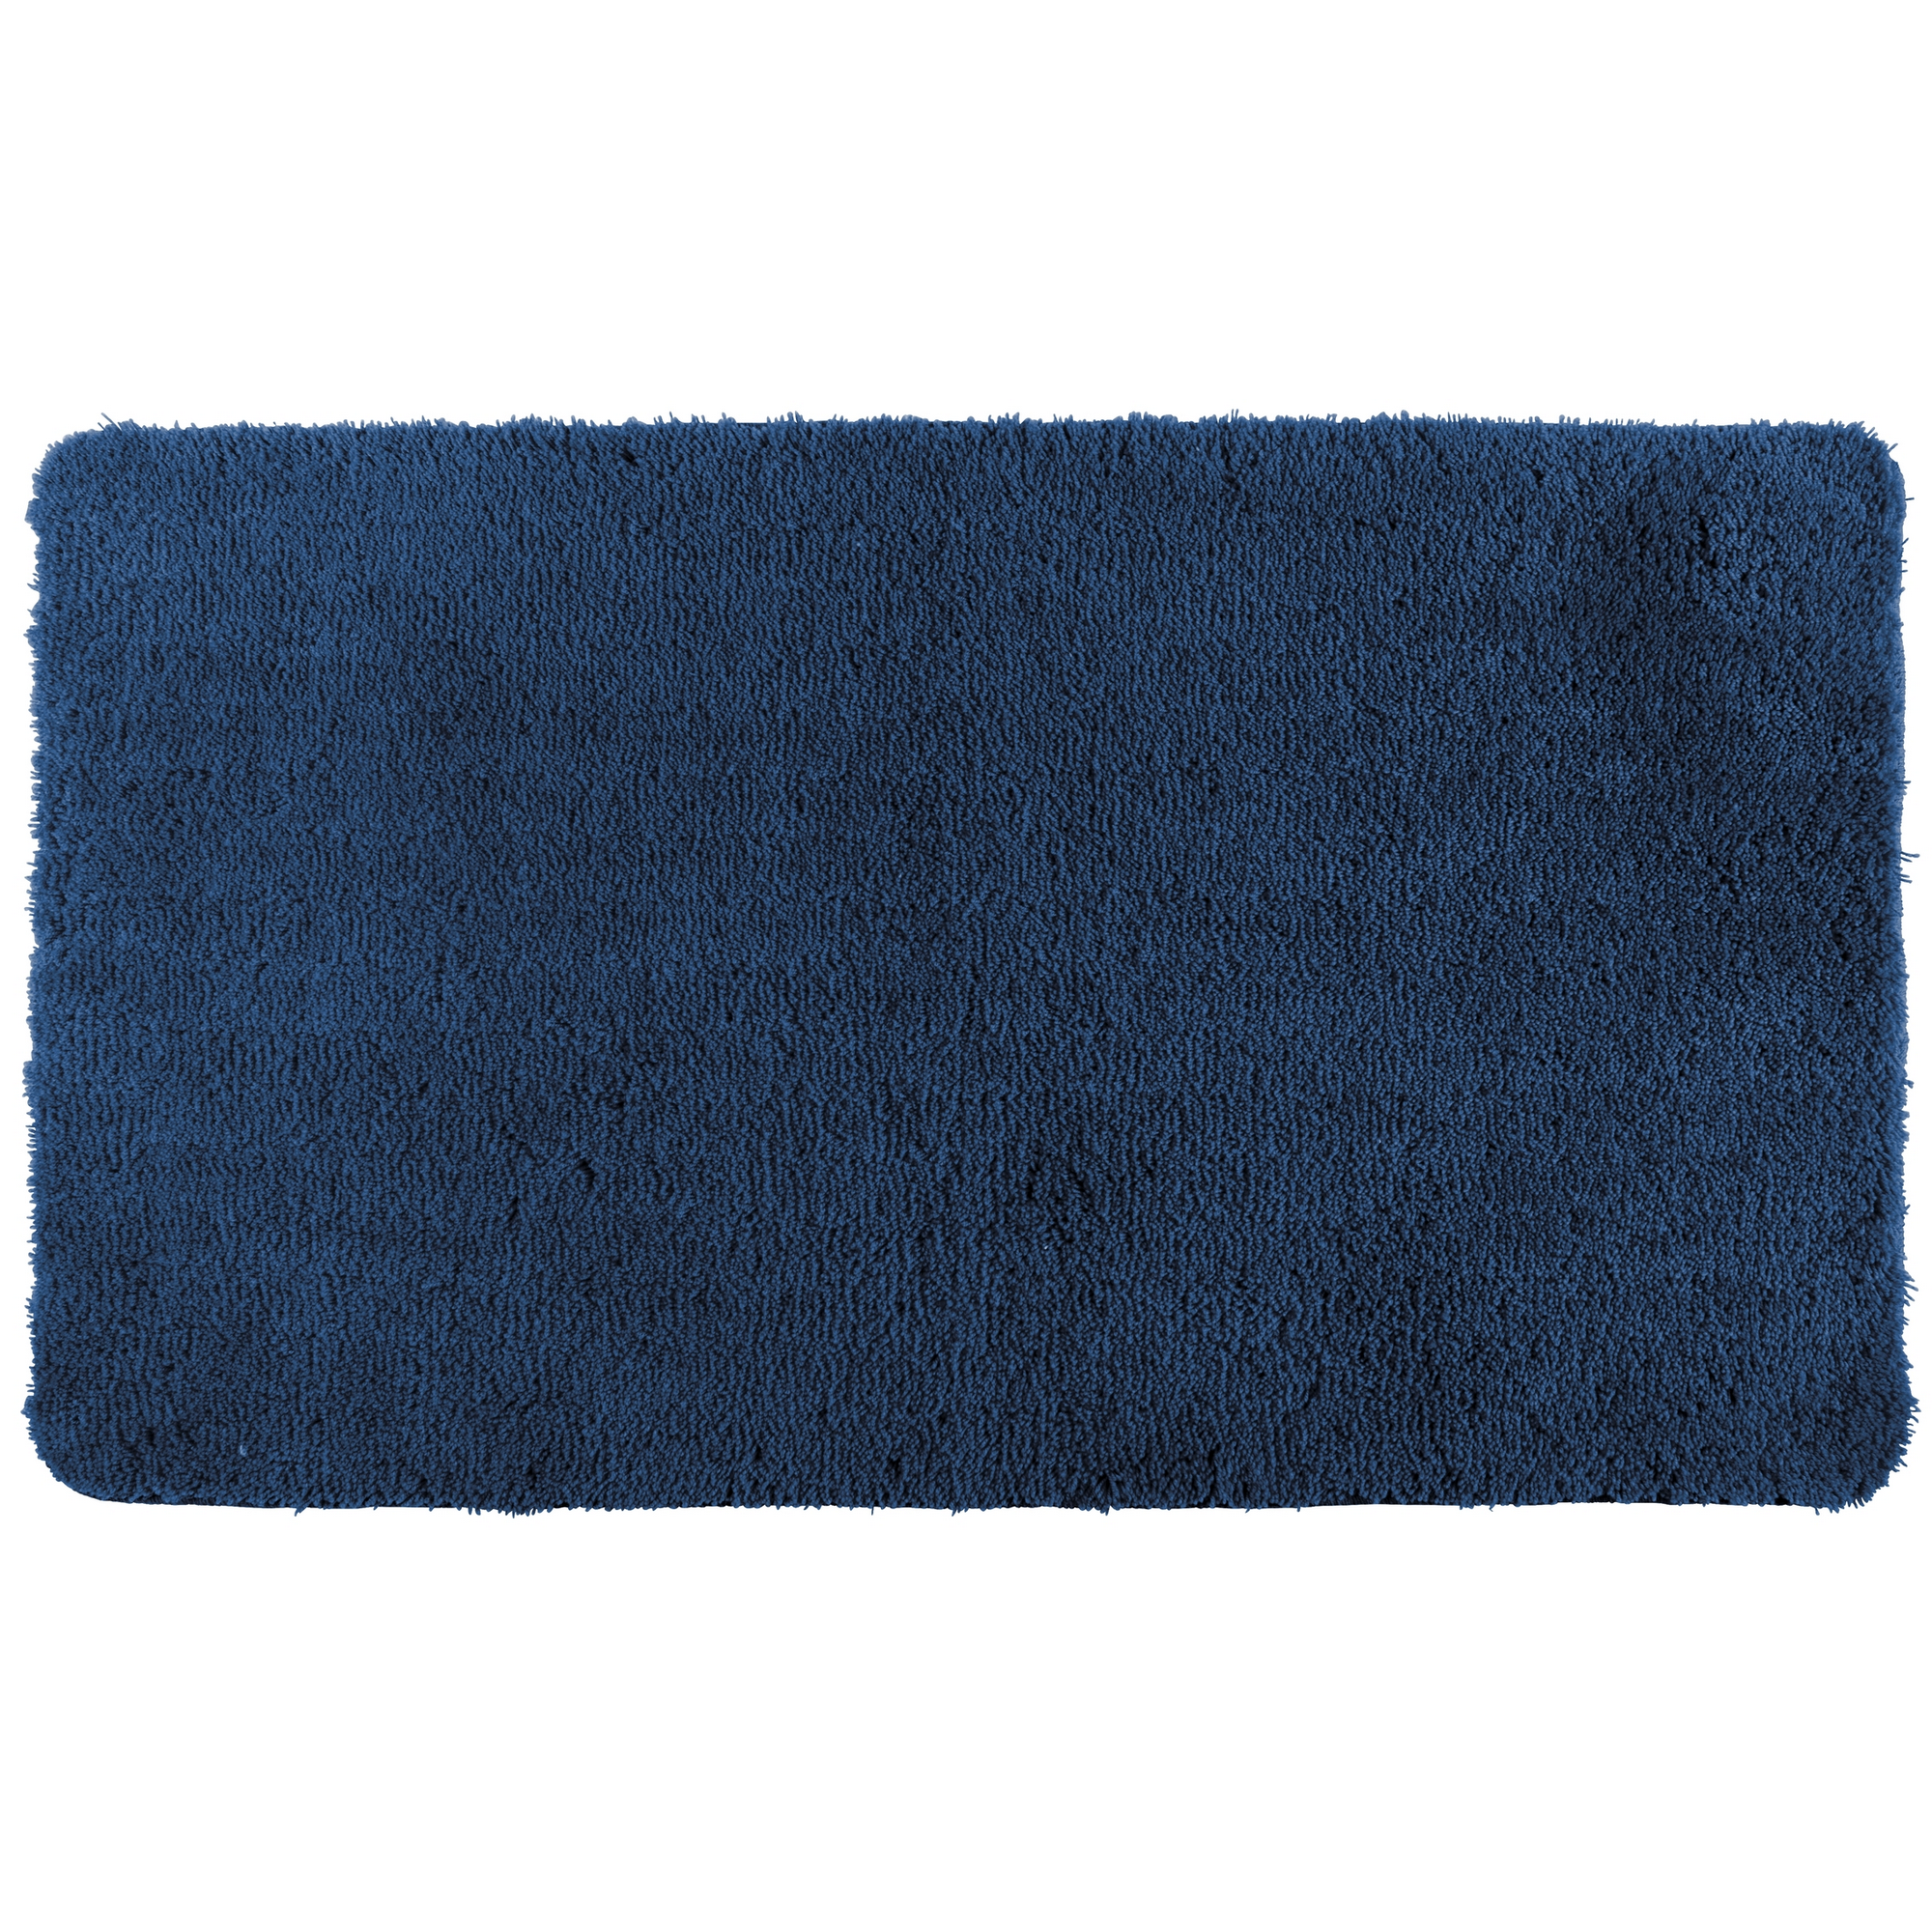 Badteppich 'Belize' Mikrofaser blau 55 x 65 cm + product picture